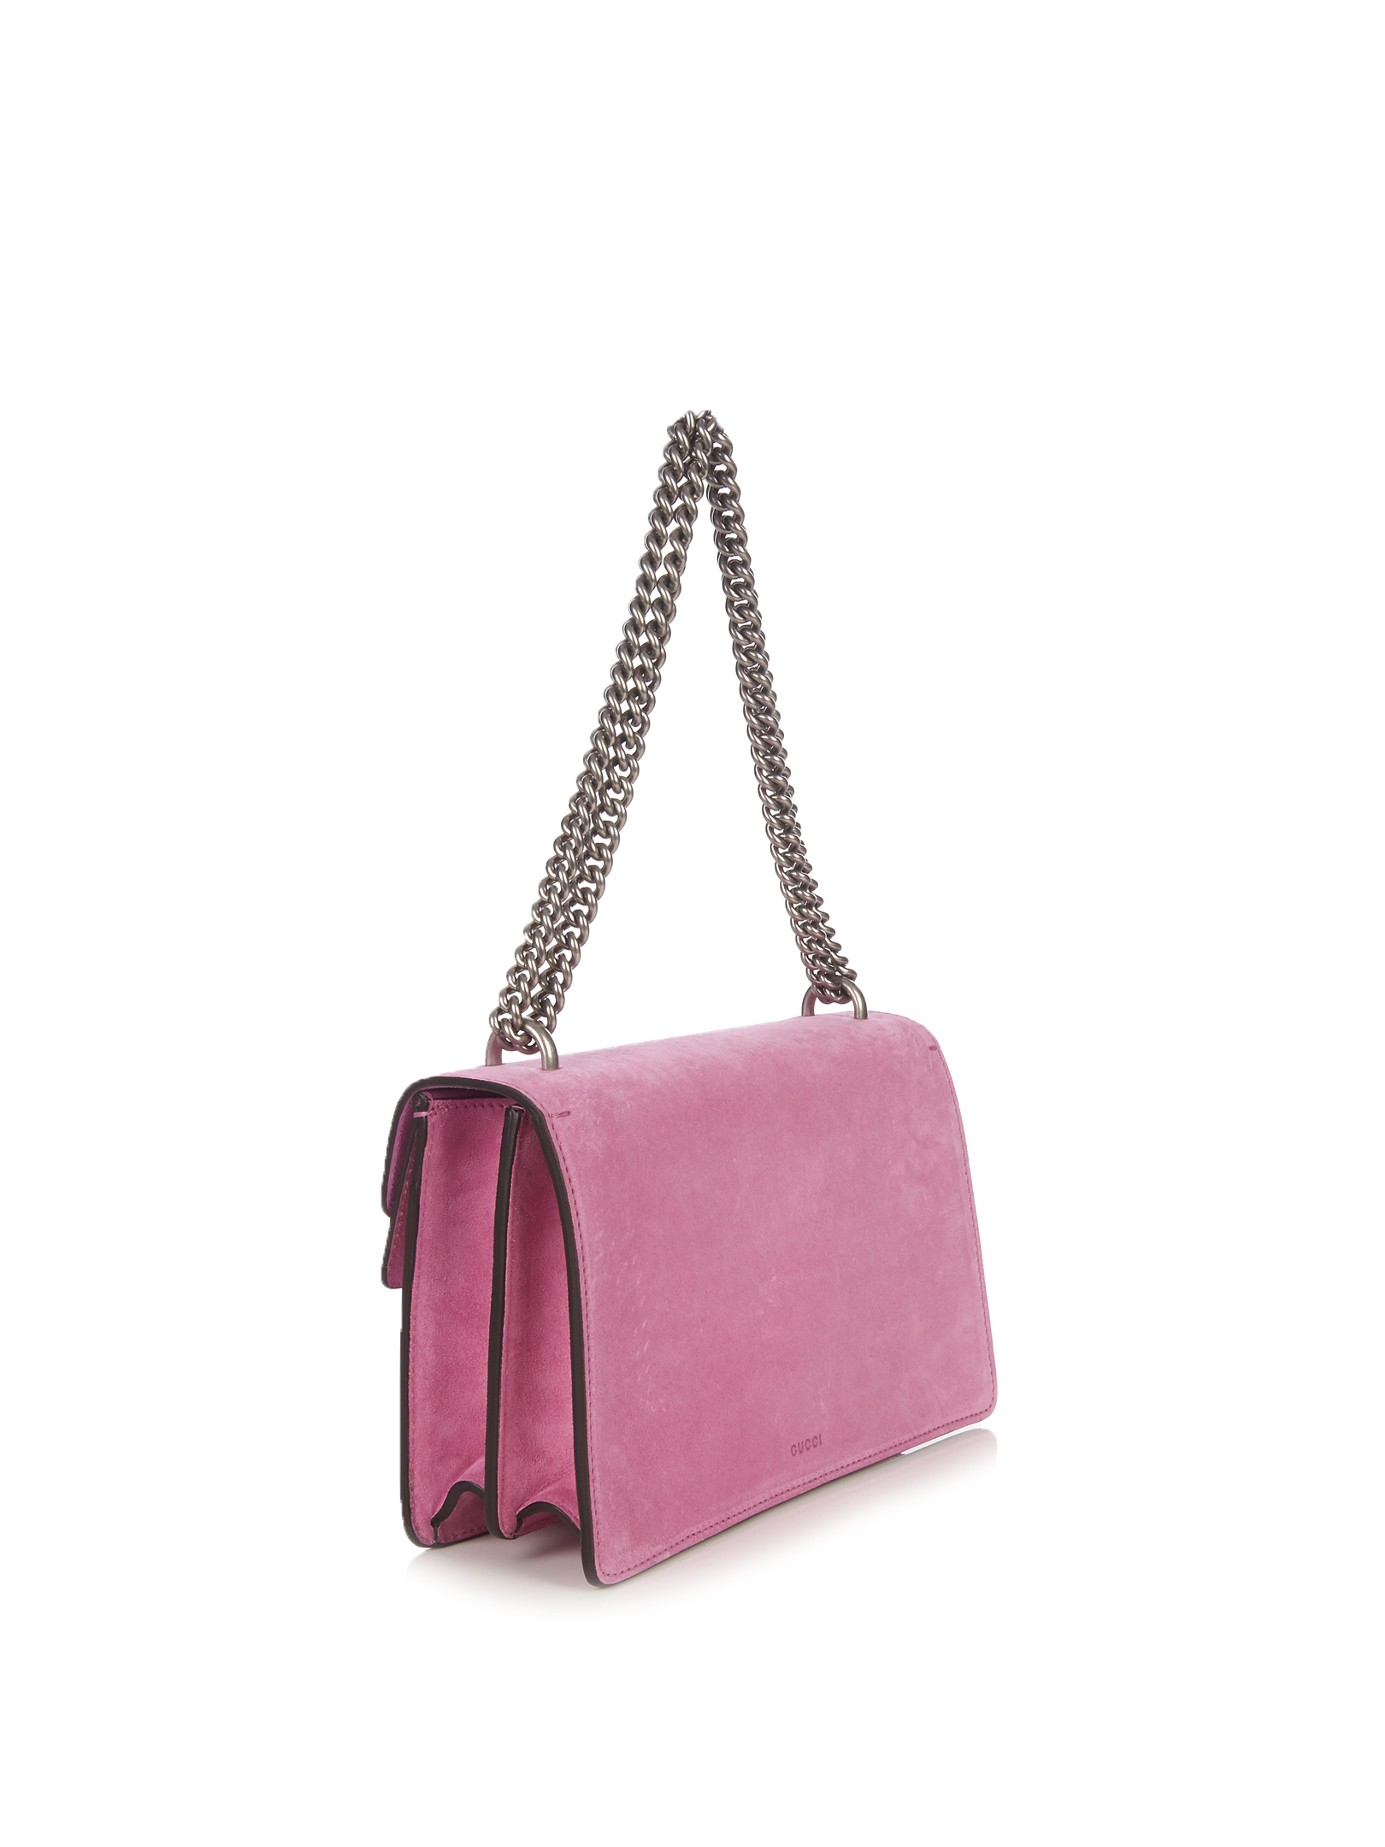 Lyst - Gucci Dionysus Suede Shoulder Bag in Pink